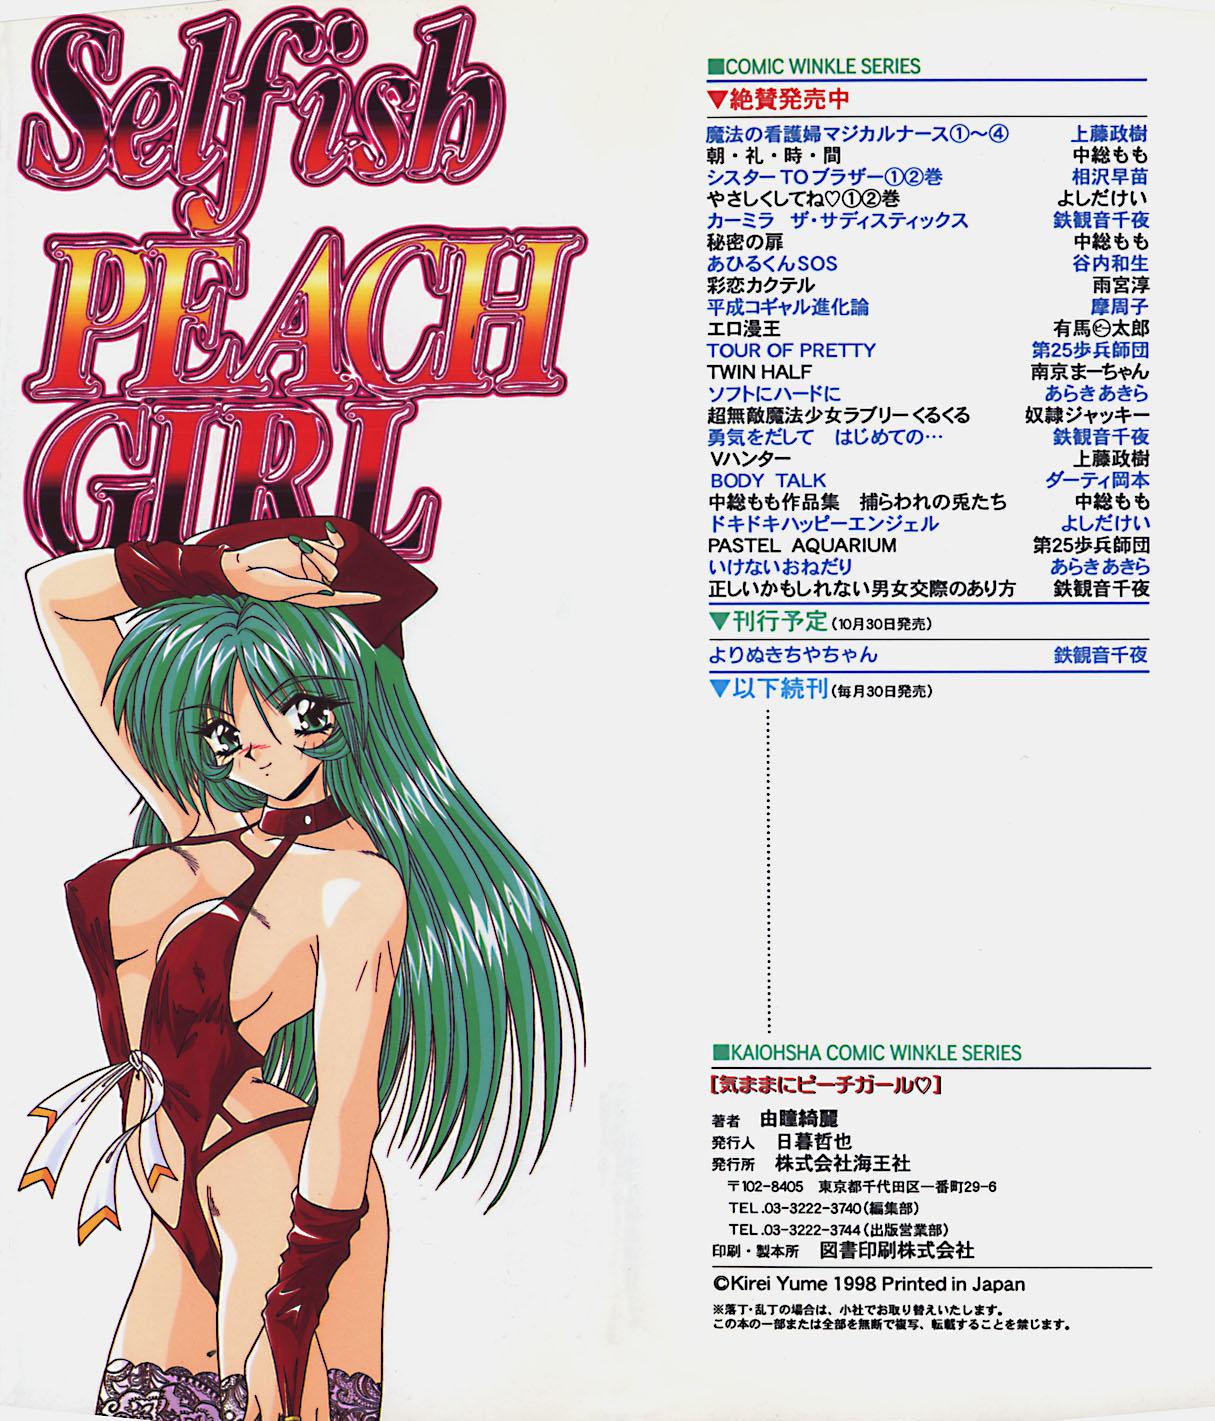 Curious Kimama ni Peach Girl - Selfish Peach Girl Sis - Page 3